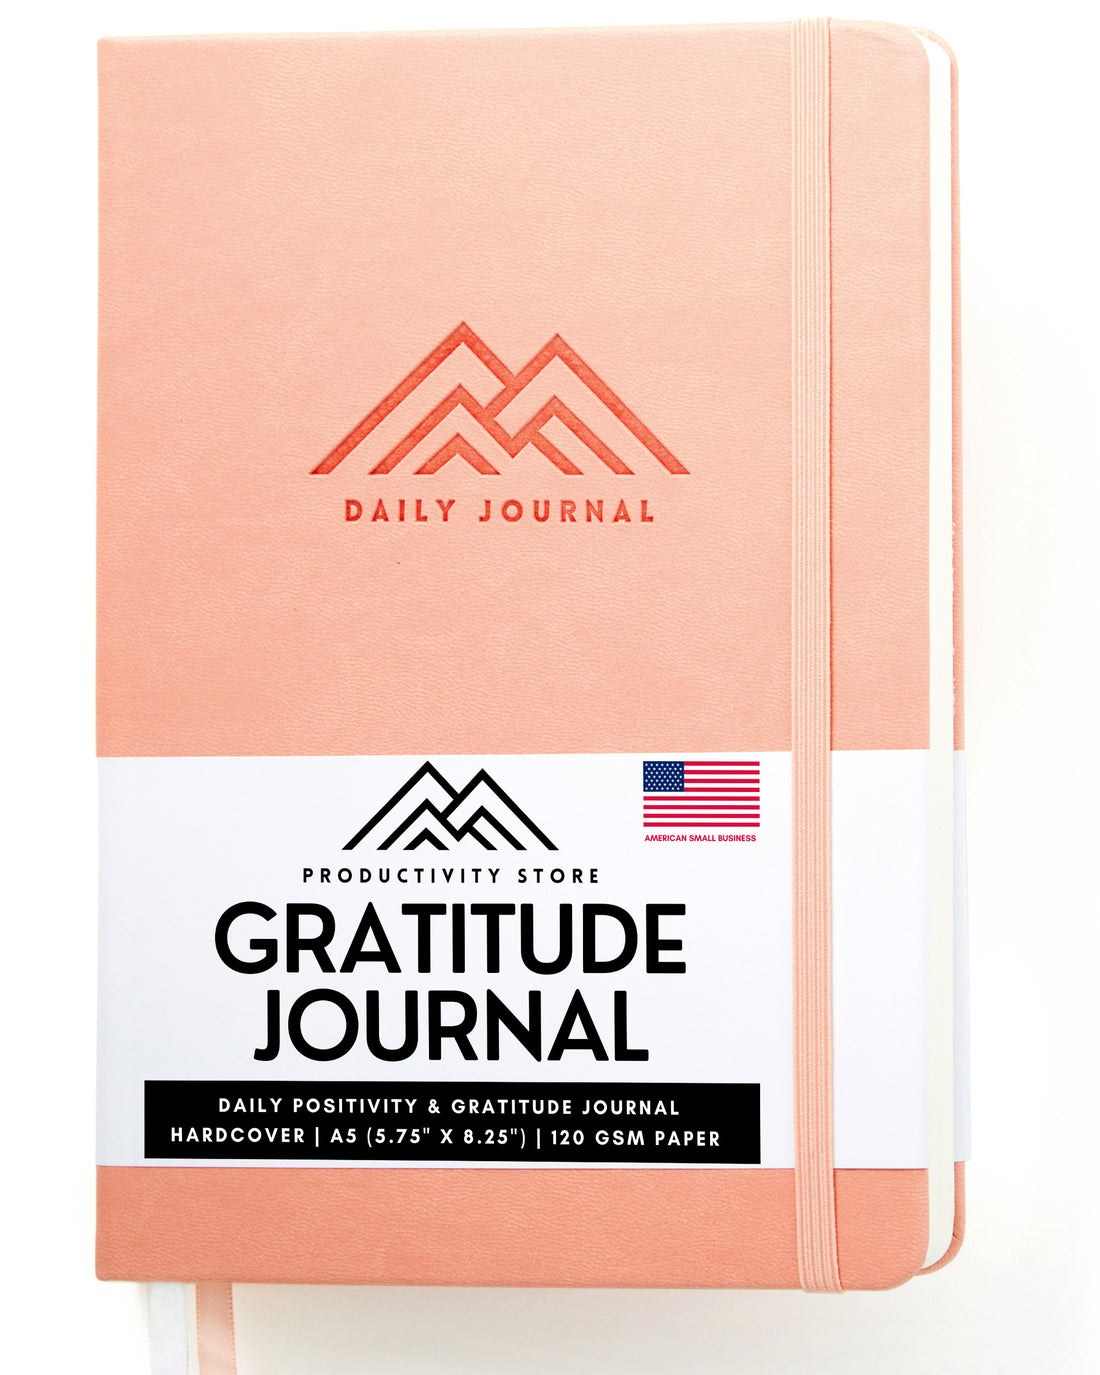 How to Make Gratitude Journaling a Habit